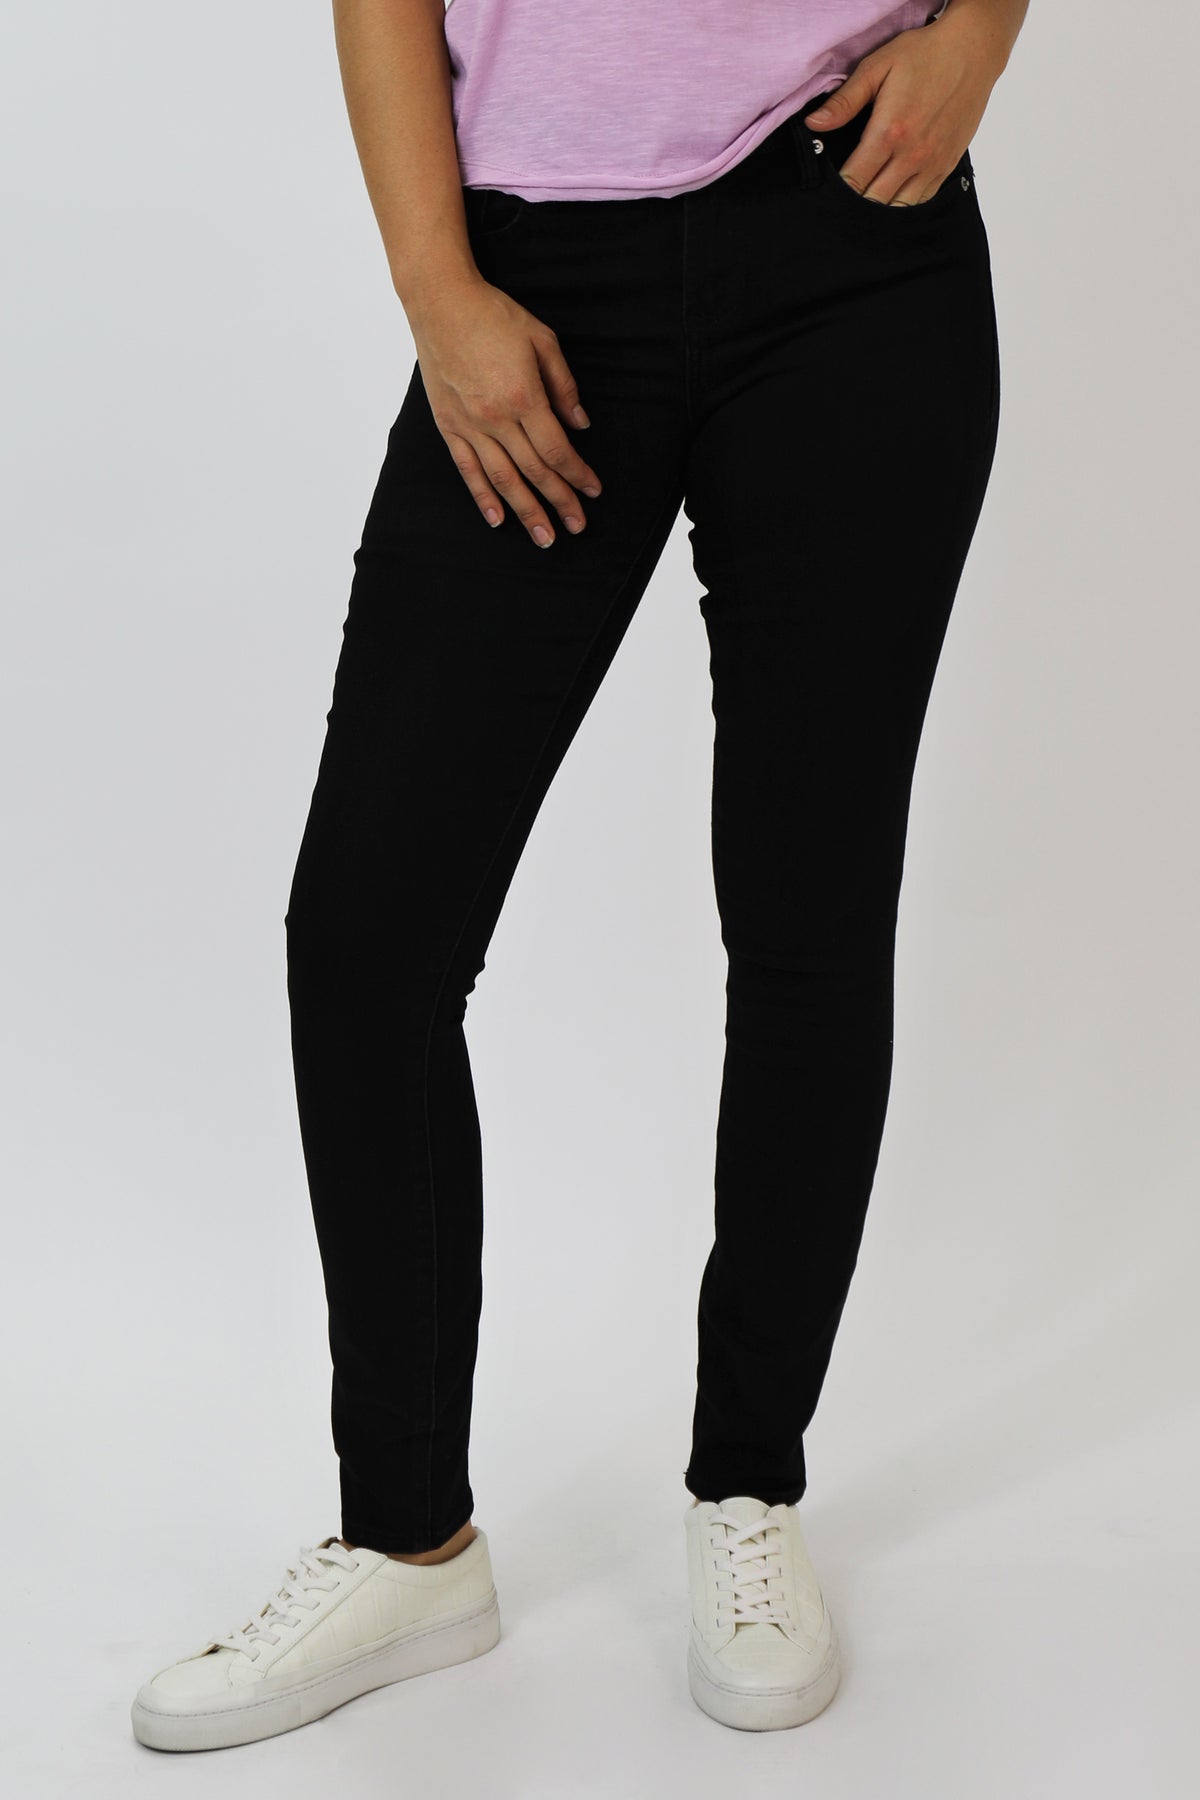 Marisol Curvy Black Skinny Jeans FINAL SALE – Pink Lily